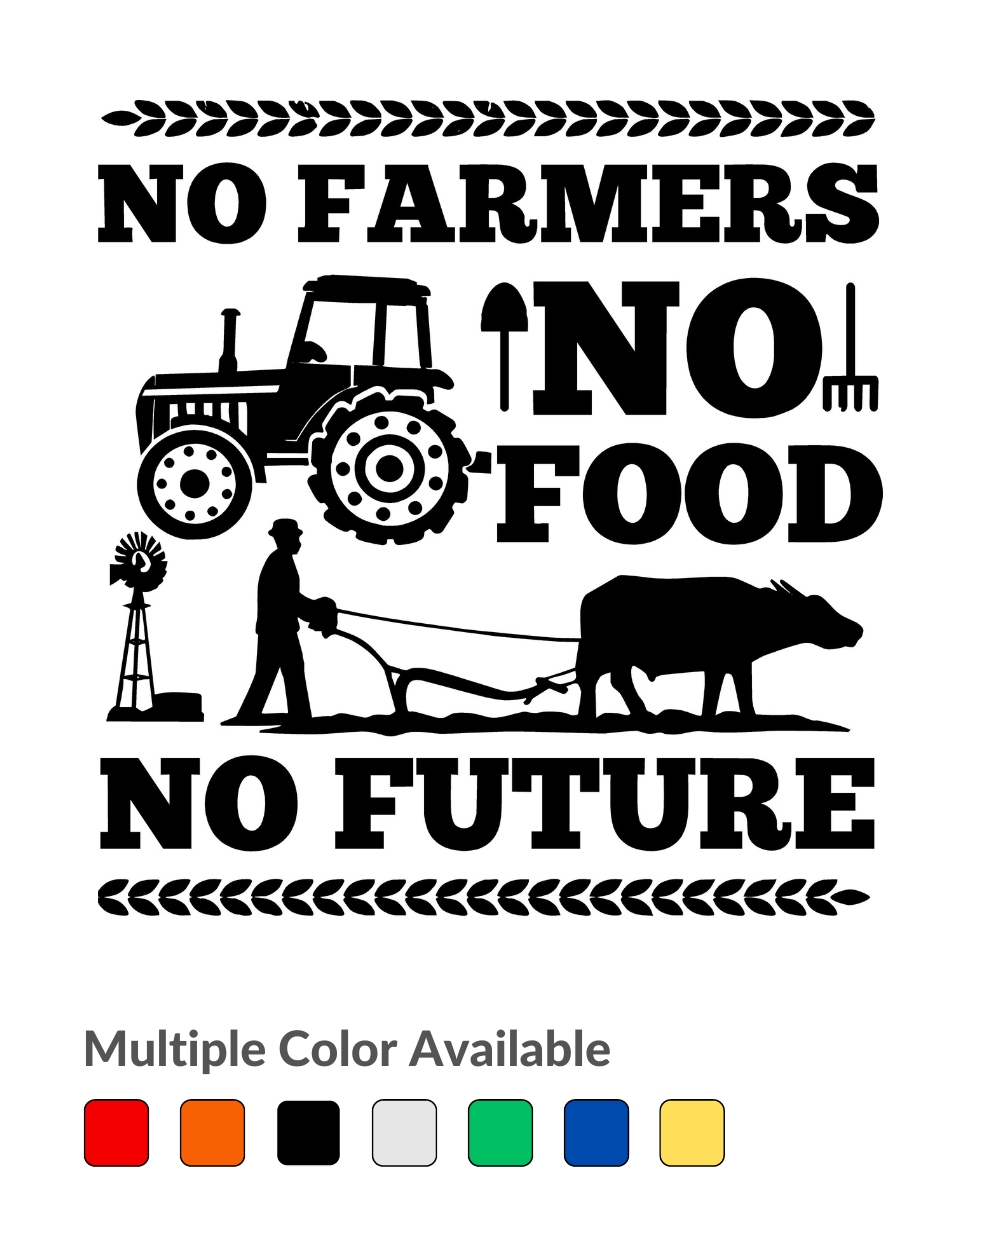 No Farmers No Food